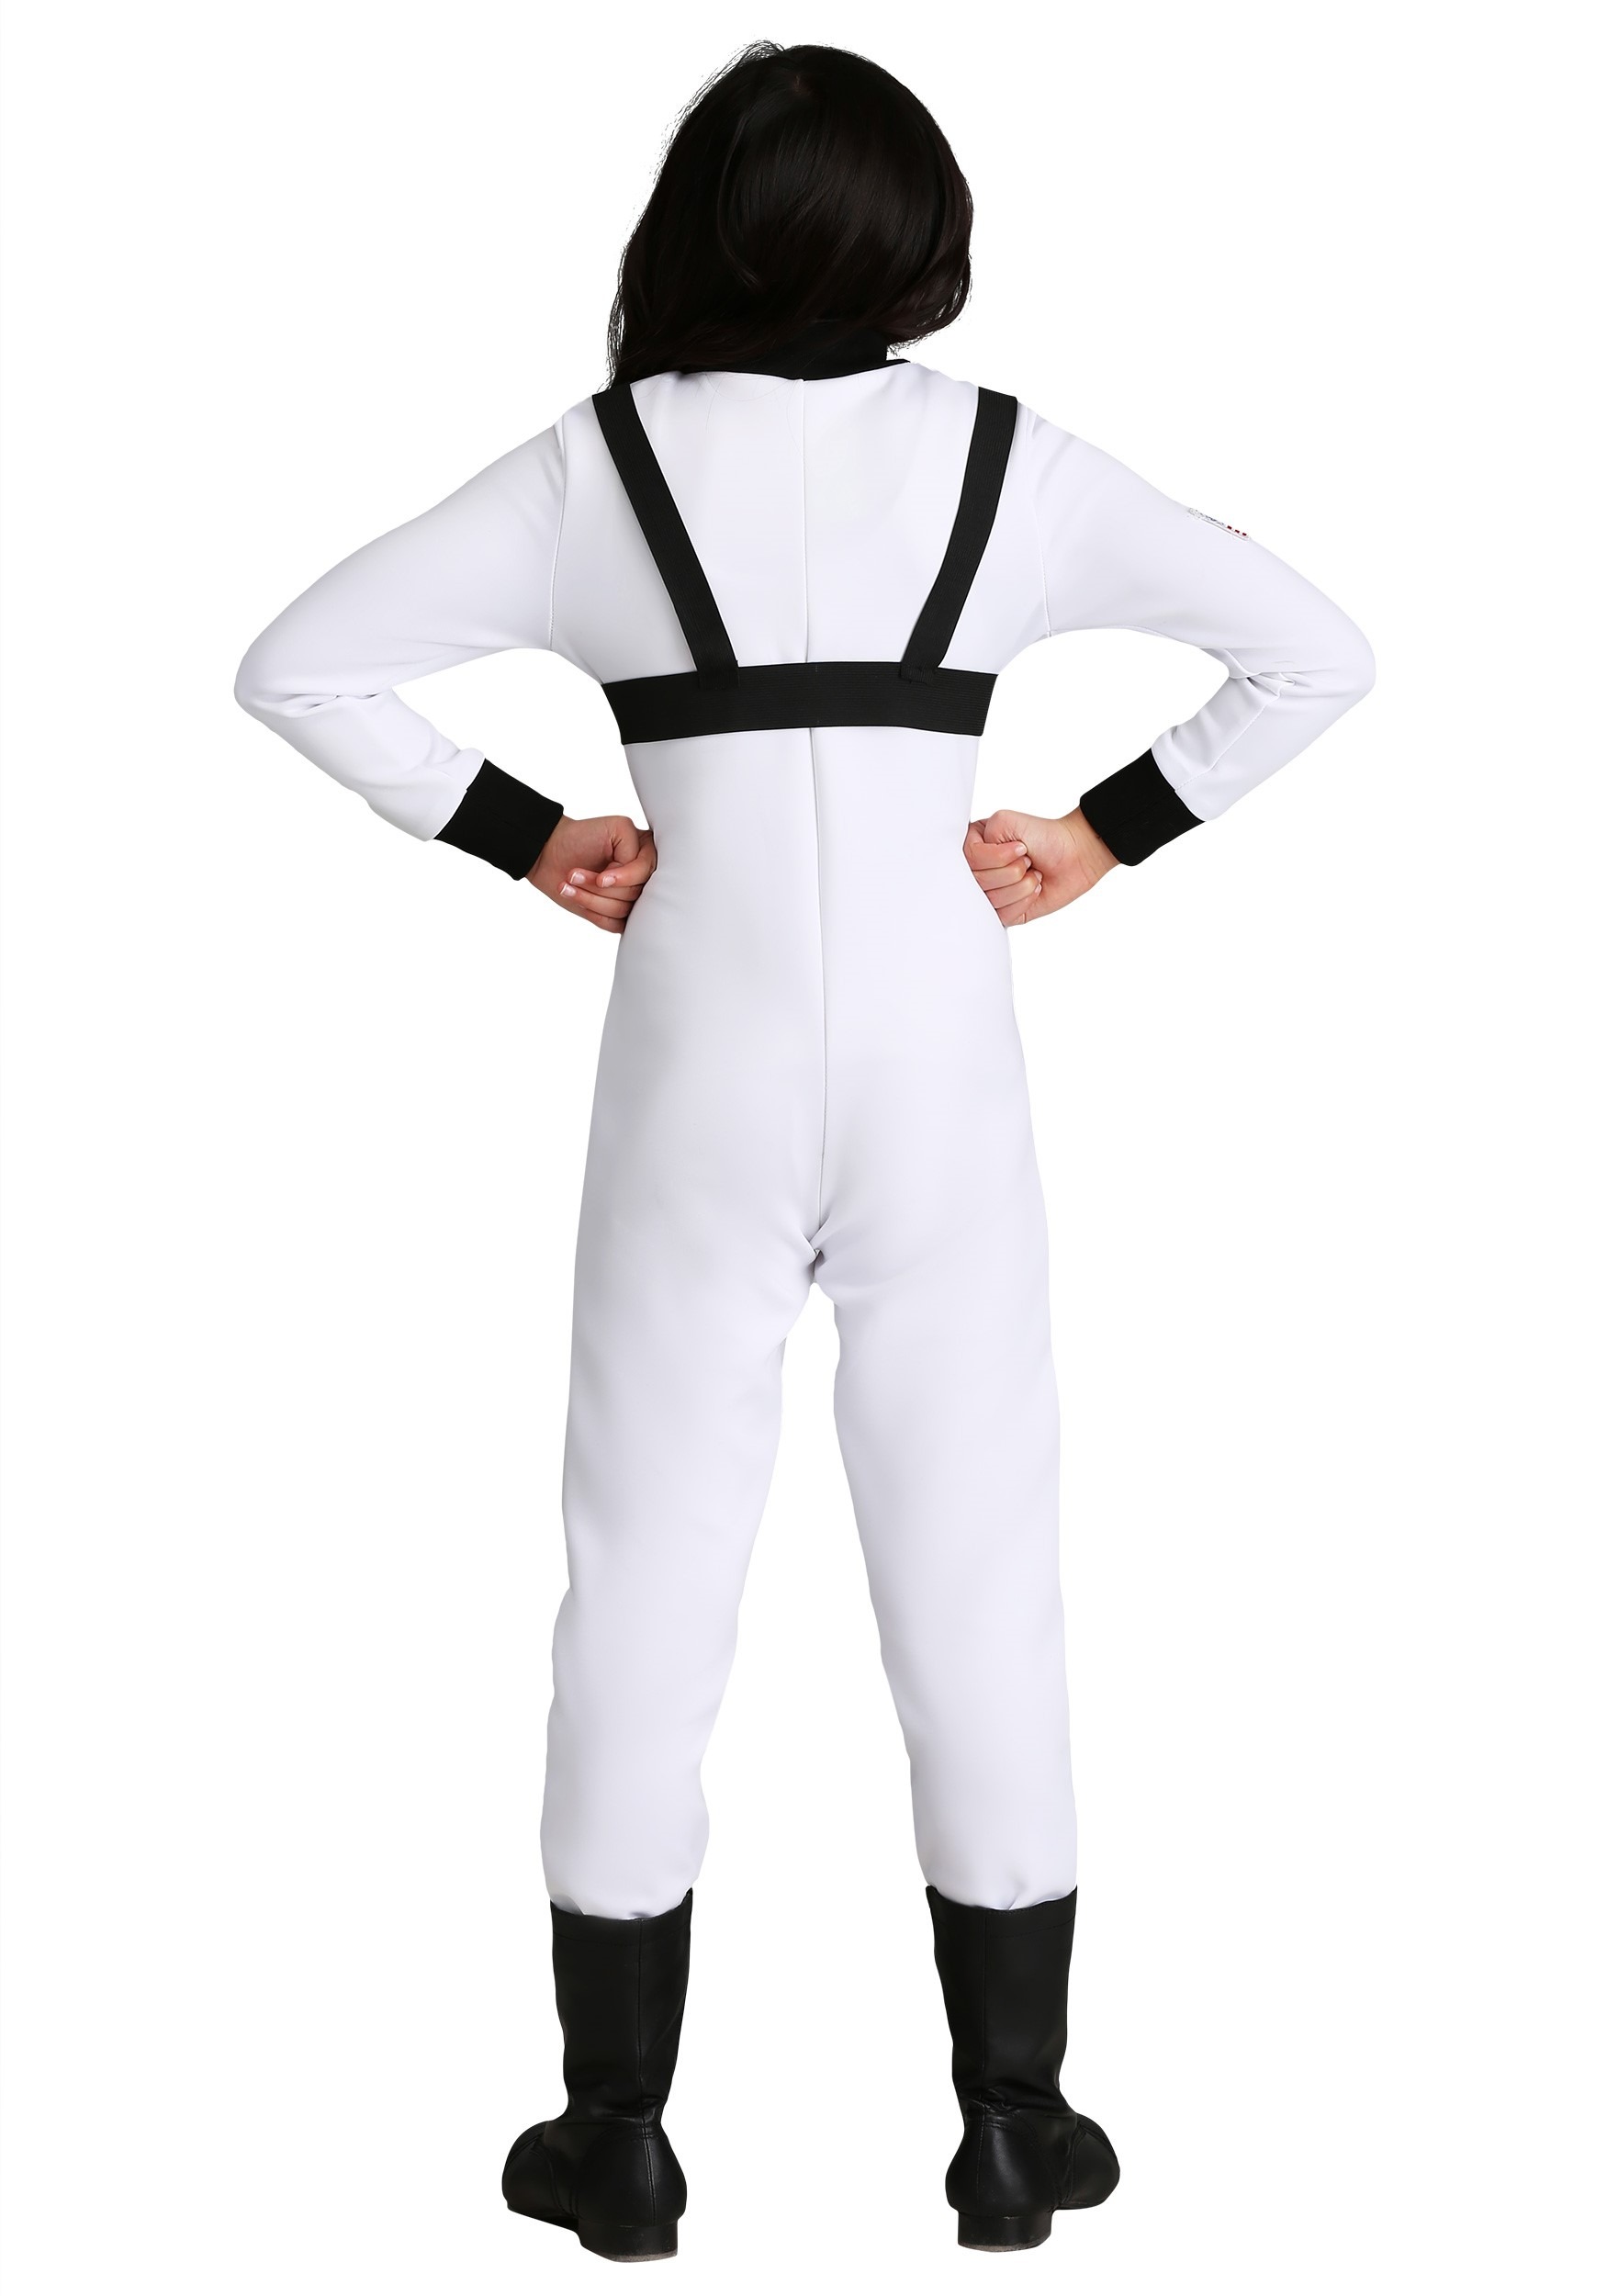 Child White Astronaut Jumpsuit Costume 